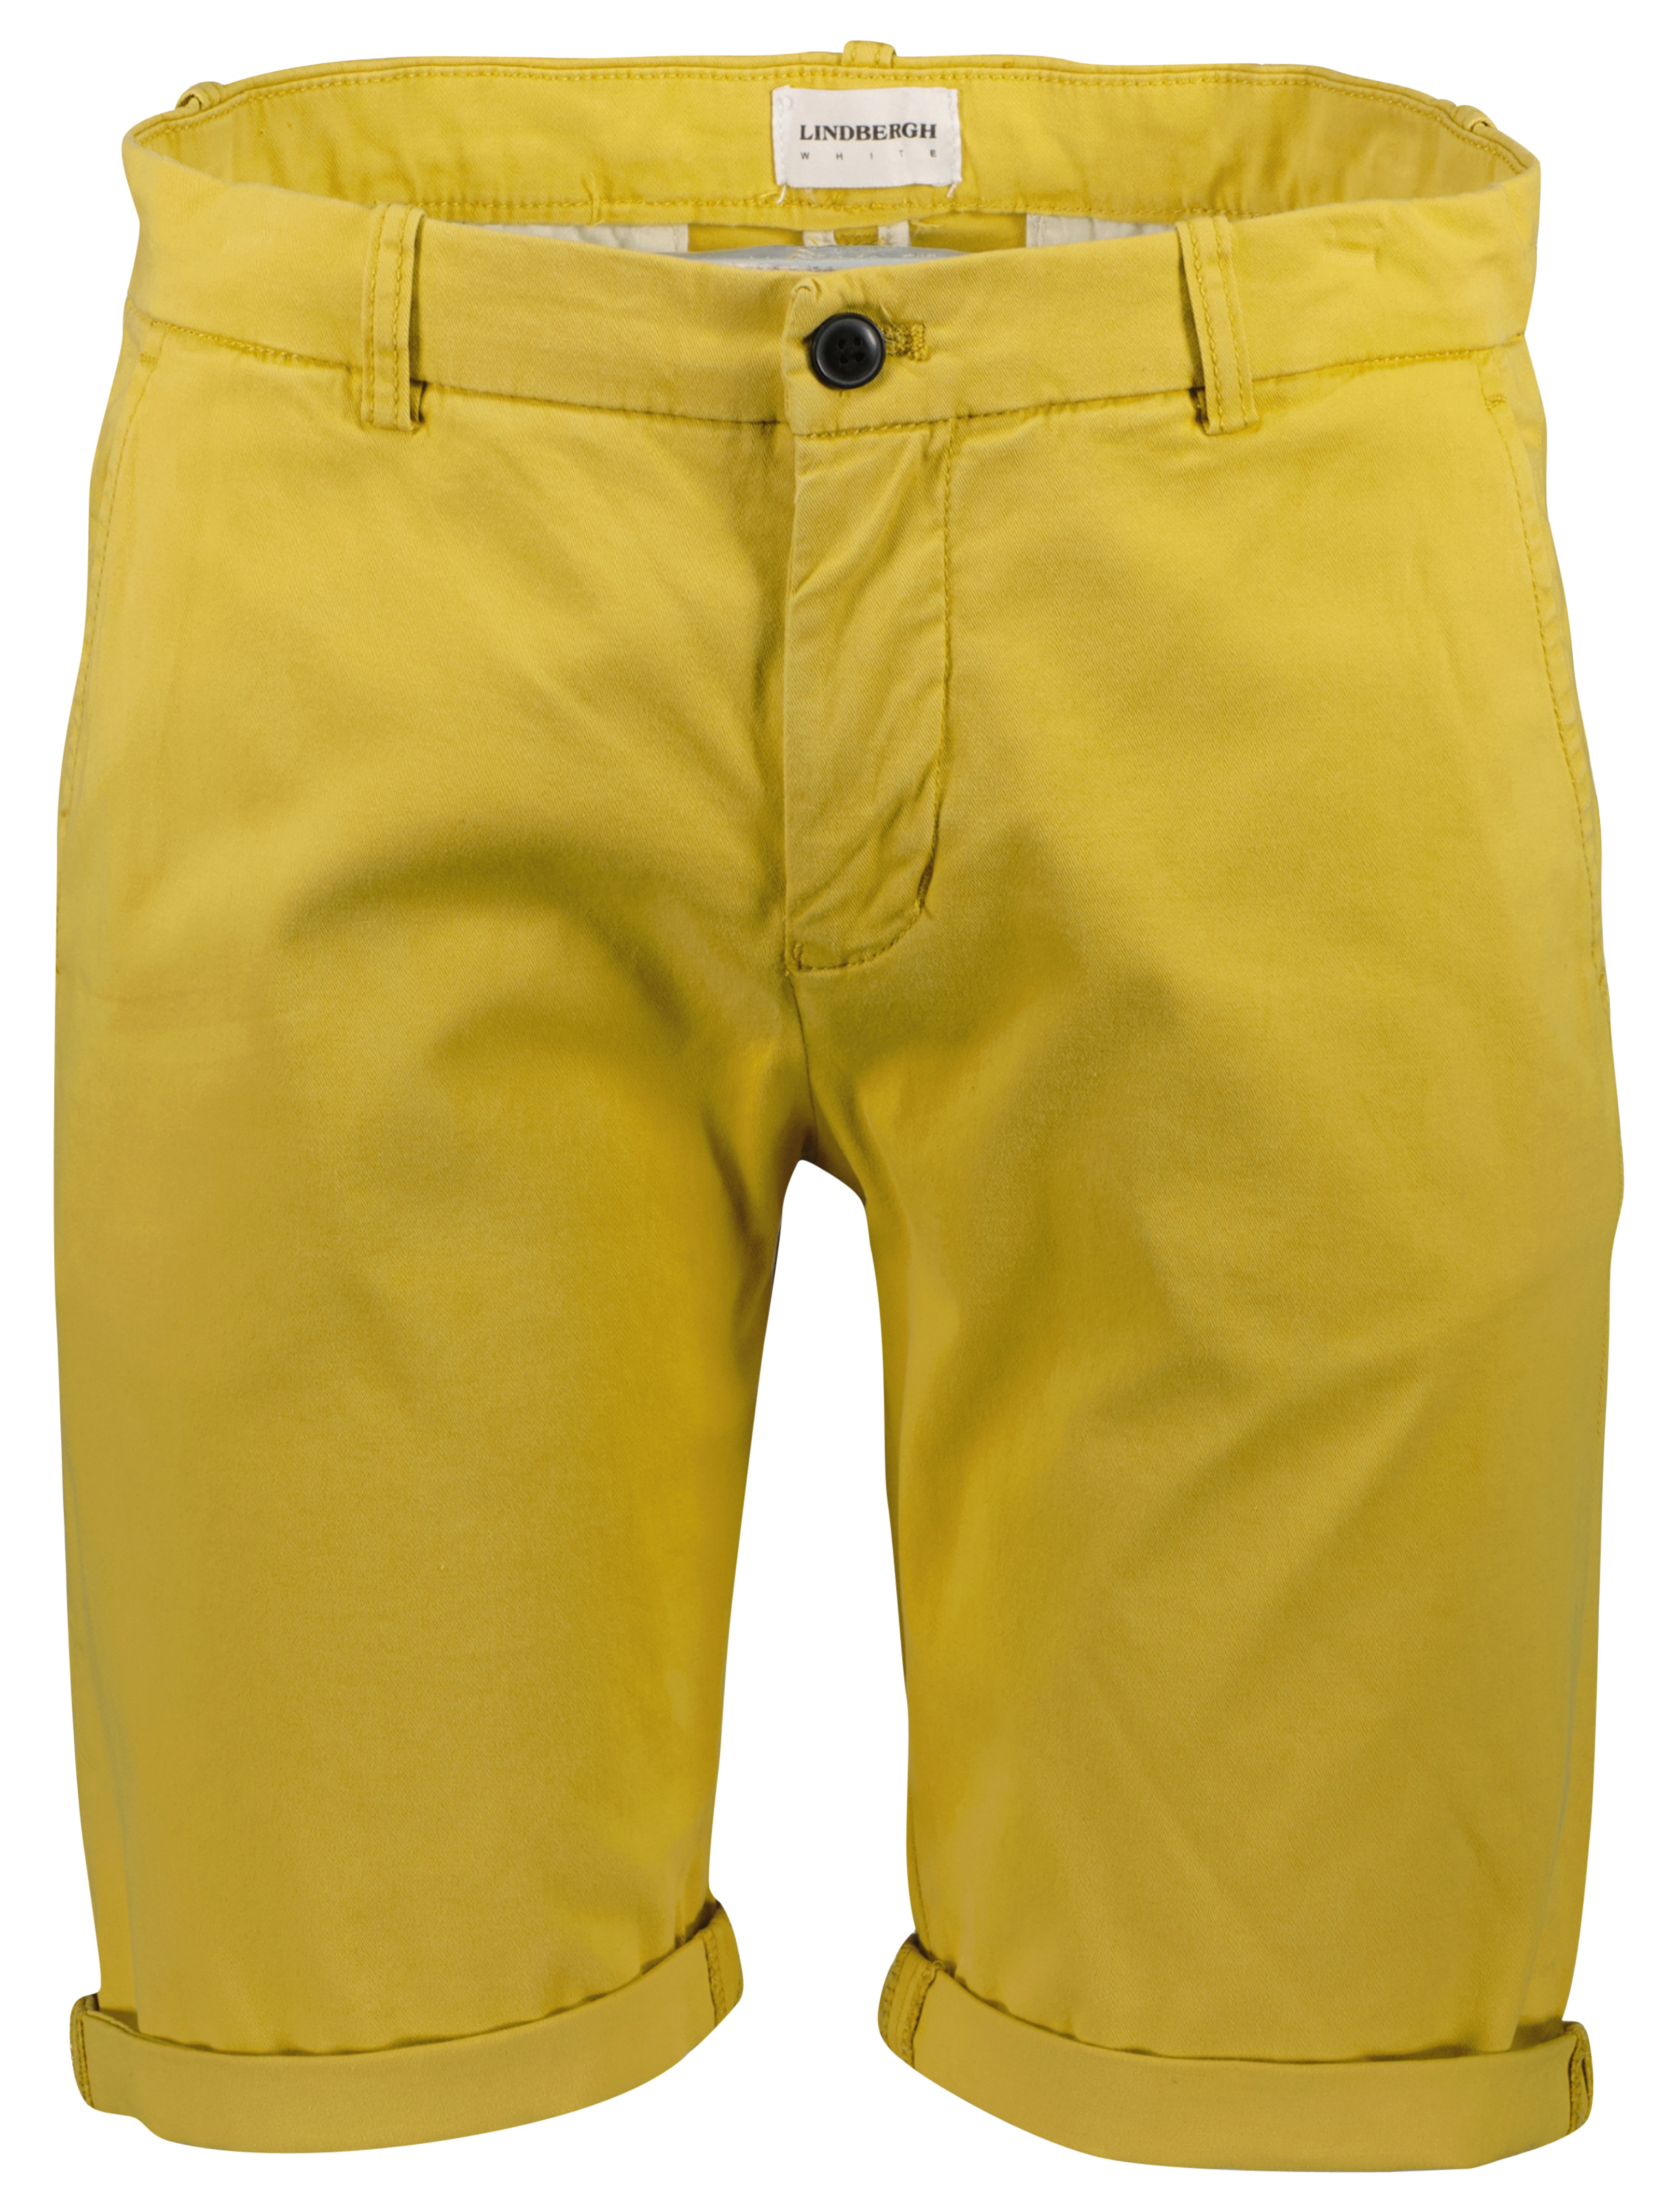 Lindbergh Chino-Shorts gelb / dk yellow